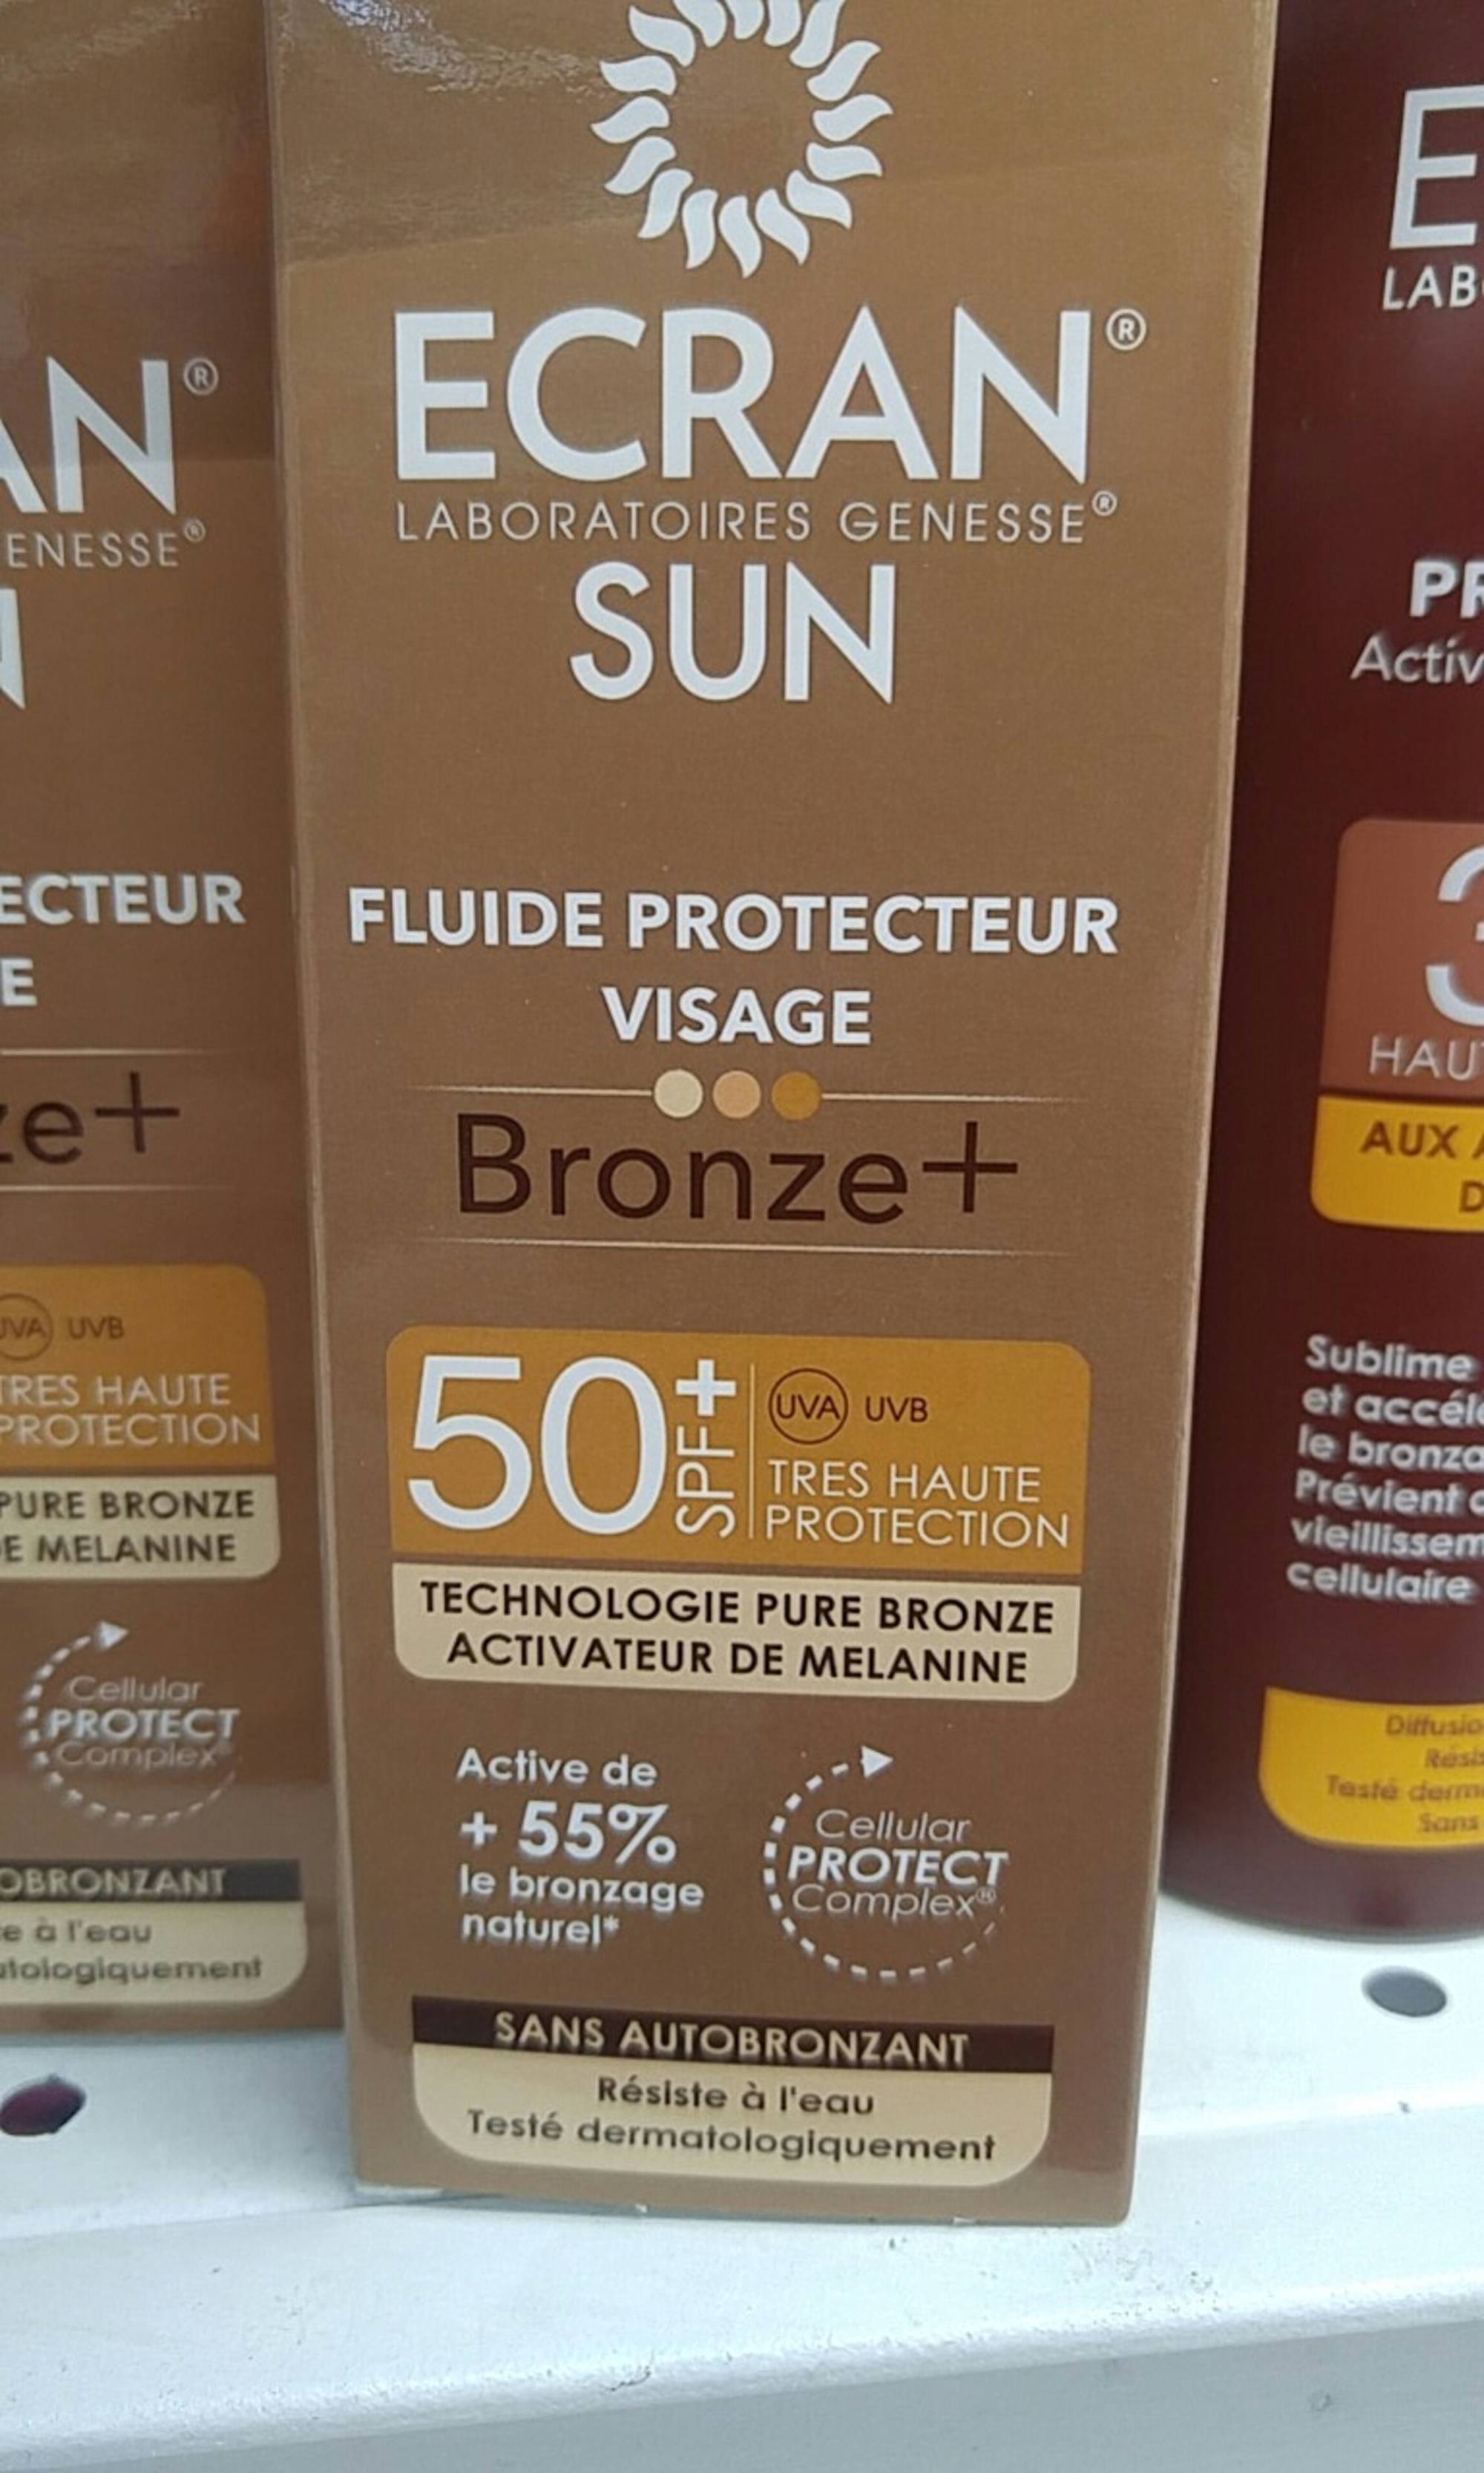 ECRAN LABORATOIRES GENESSE - Sun - Fluide protecteur visage bronze+ SPF 50+